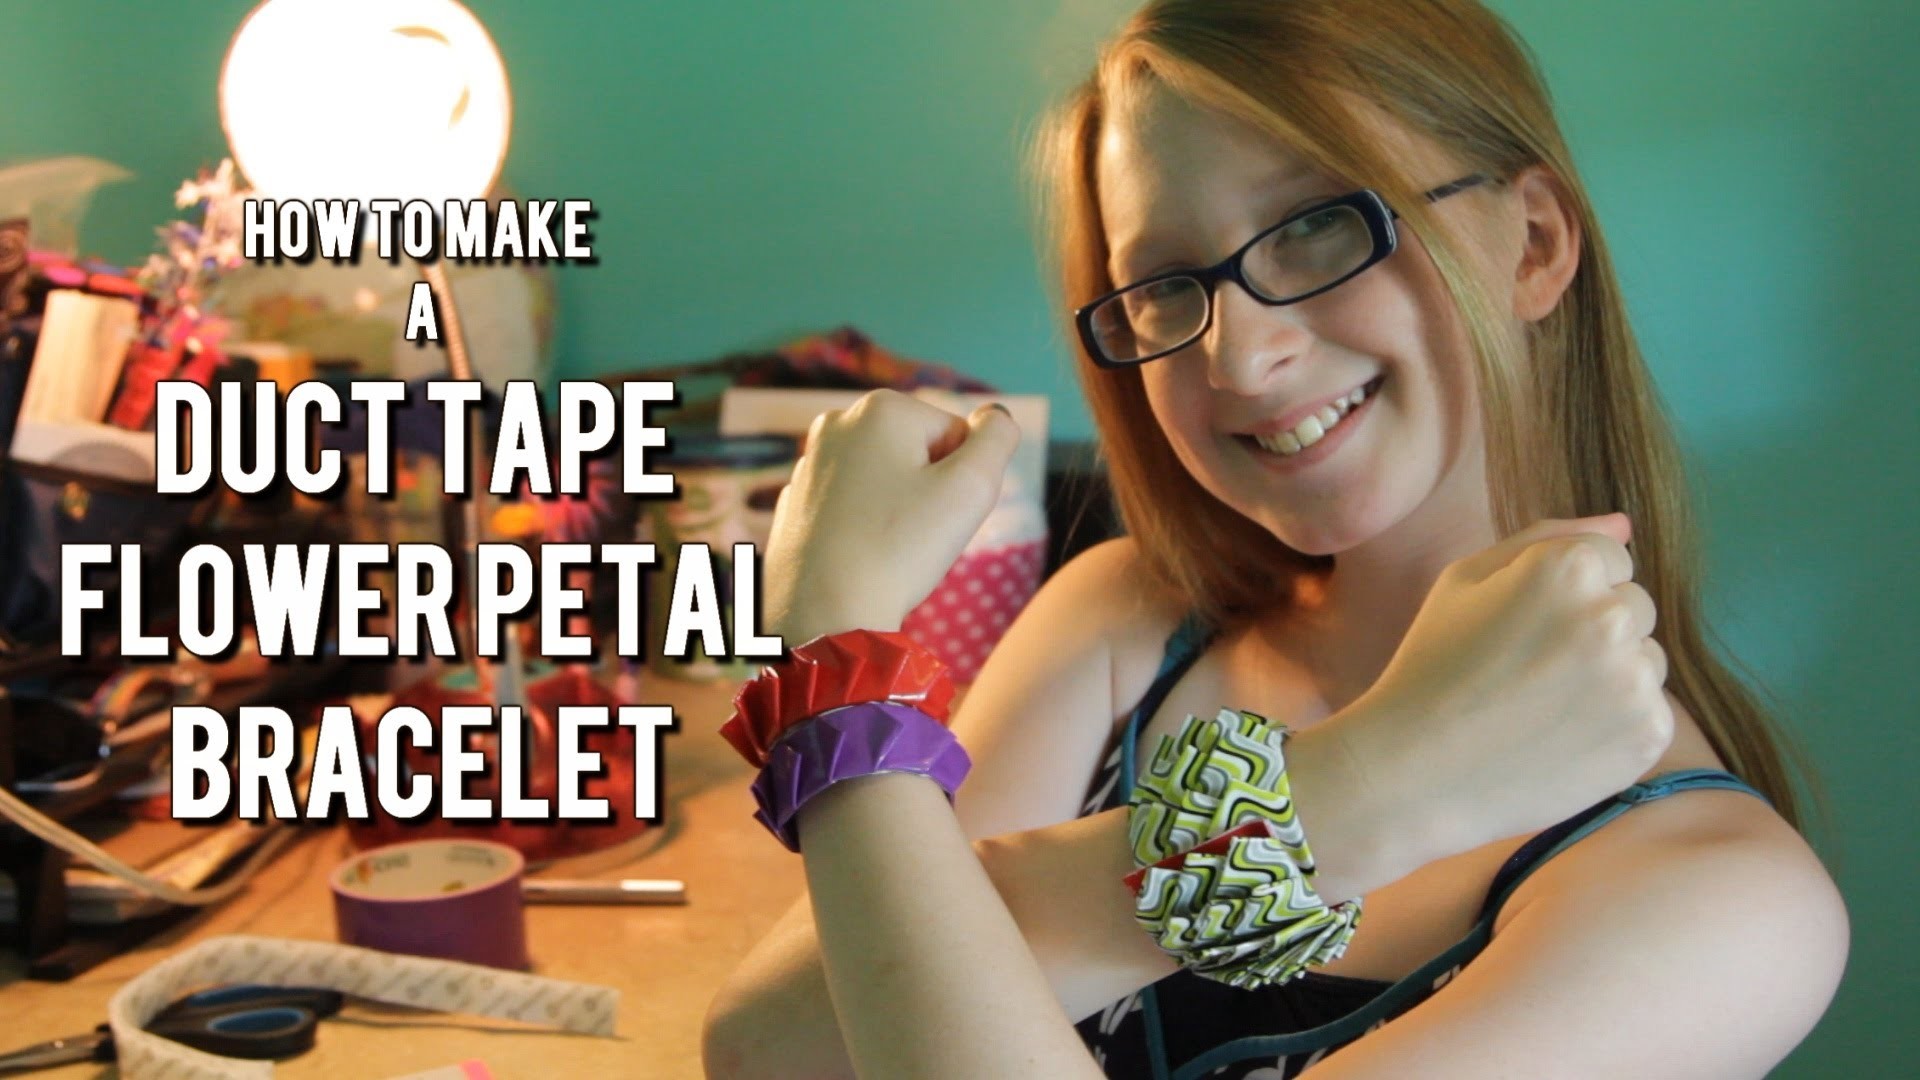 Tutorial - How to Make a Duct Tape Flower Petal Bracelet